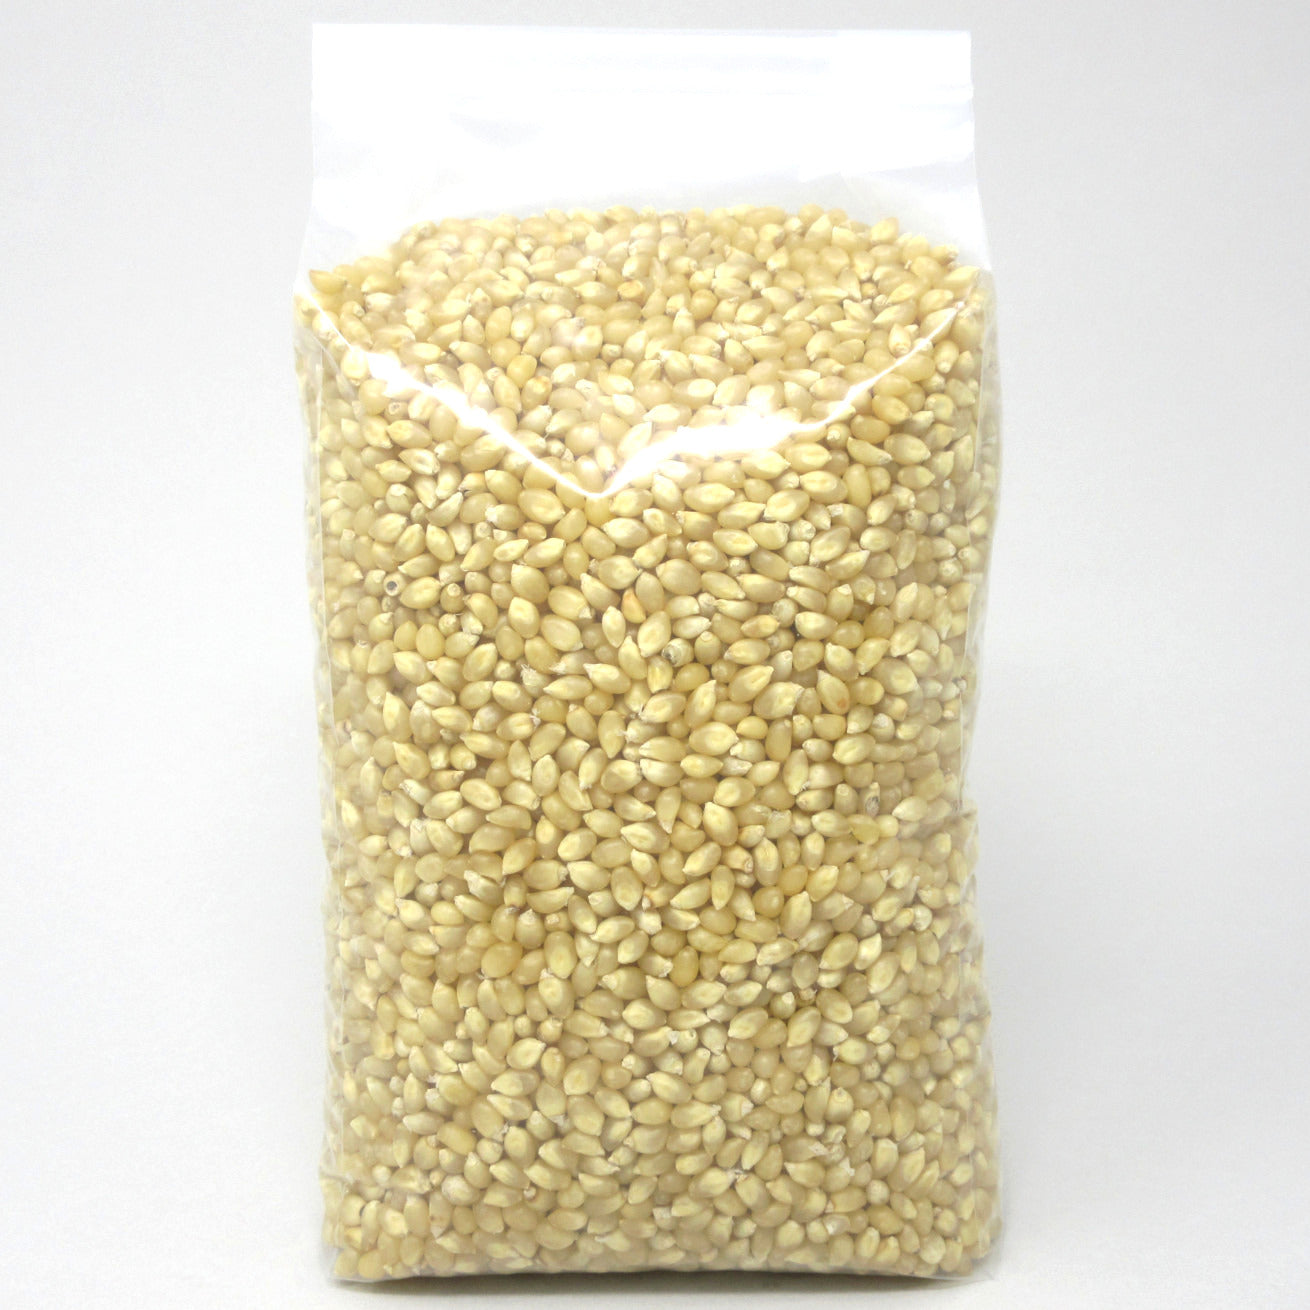 Flour Barrel product image - White Popping Corn